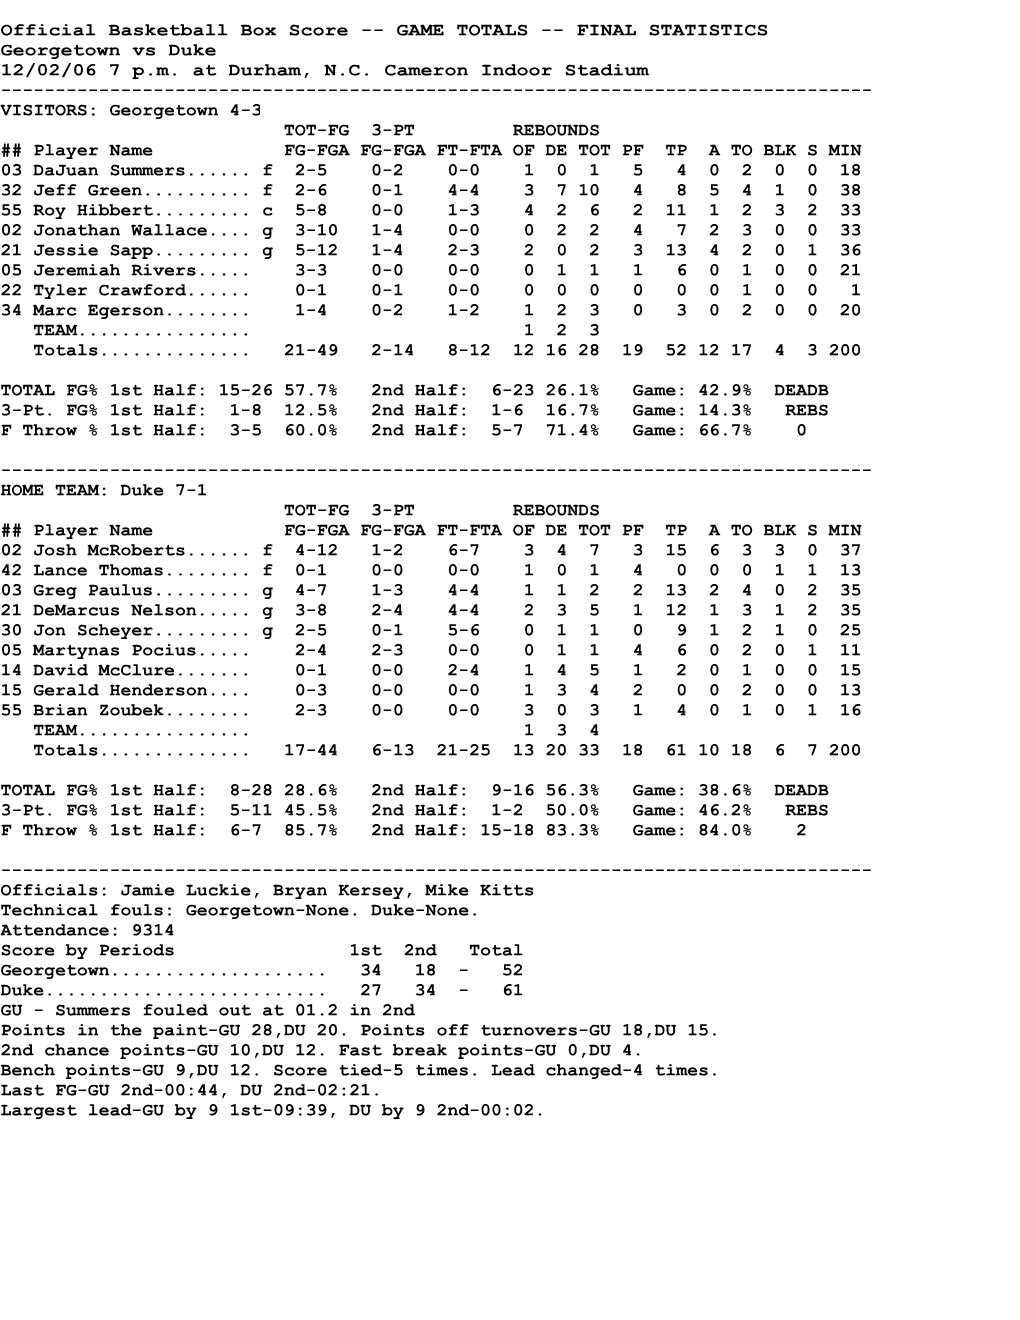 Official Basketball Box Score -- GAME TOTALS -- FINAL STATISTICS Georgetown Vs Duke 12/02/06 7 P.M